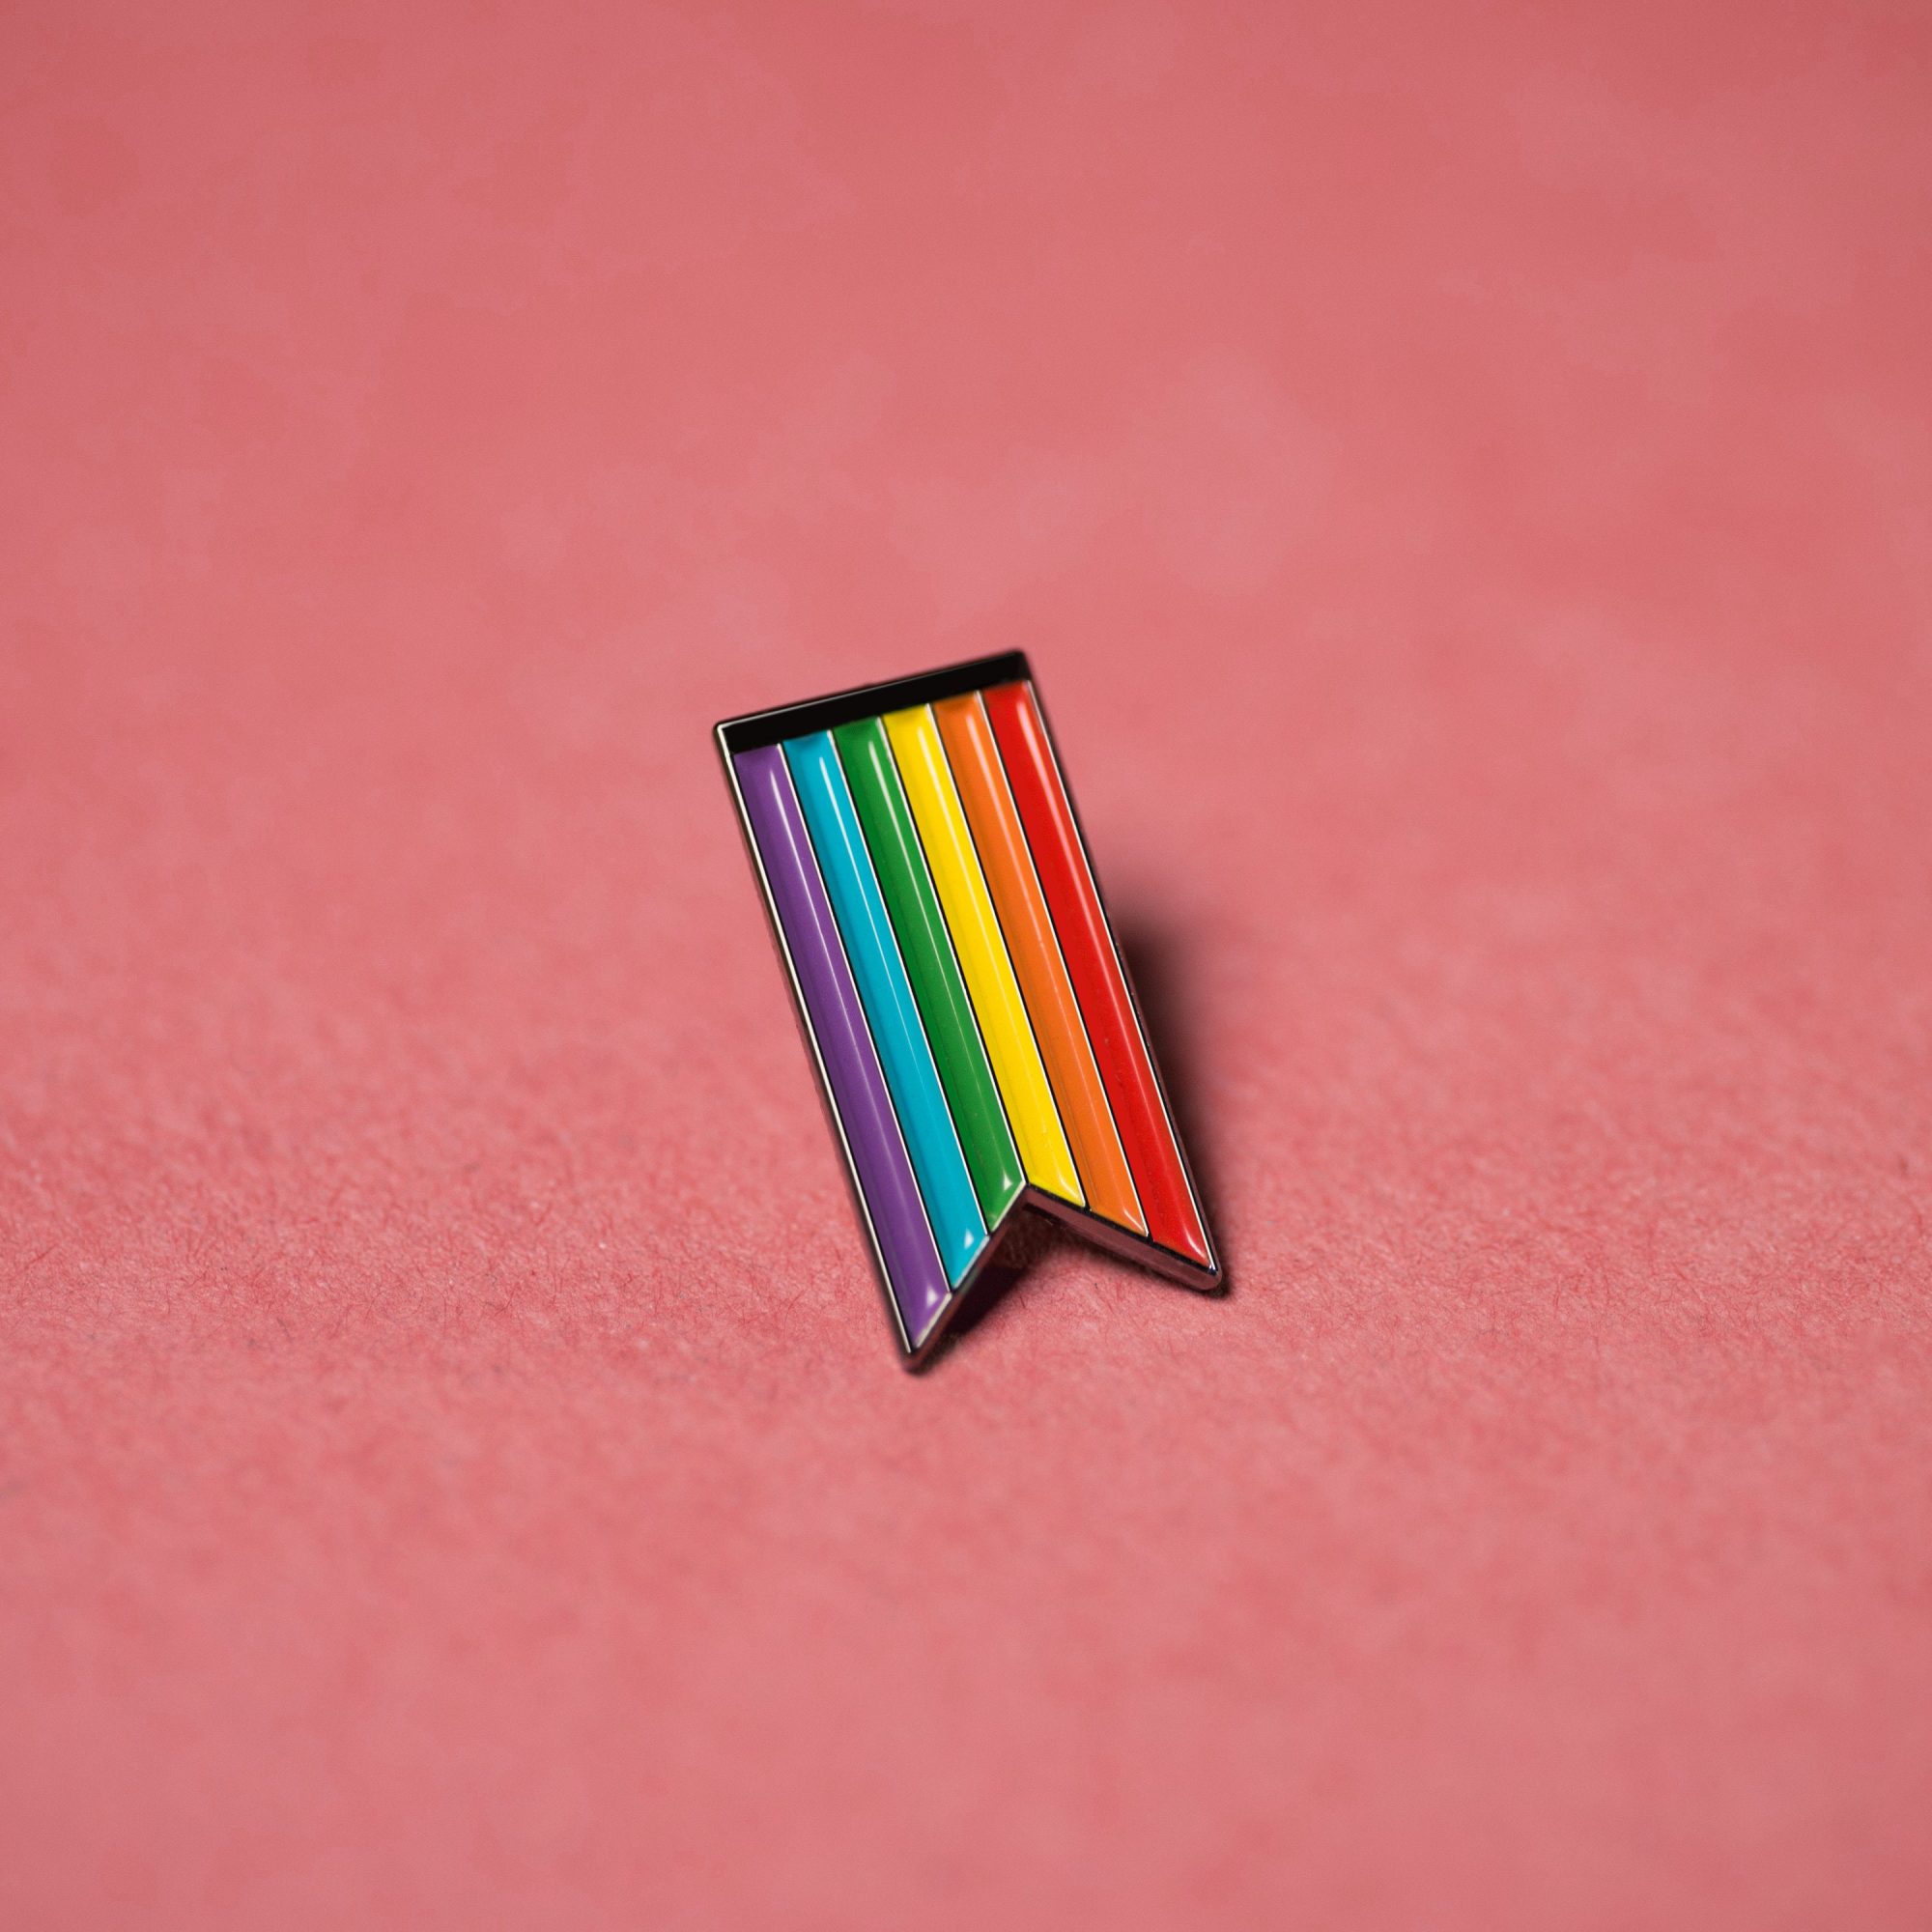 A close up photo of a rainbow flag pin badge